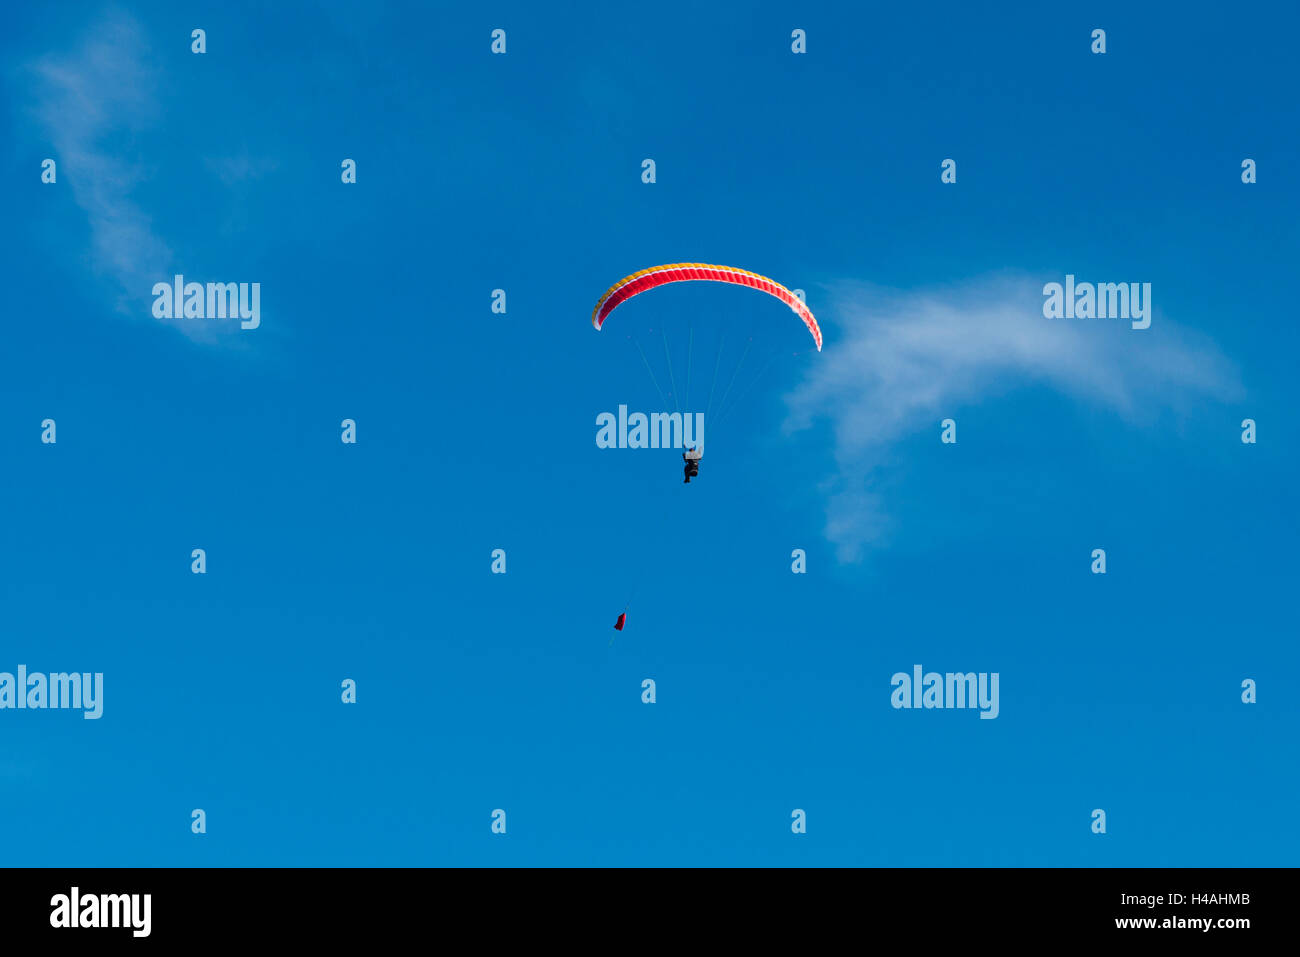 Paraglider, aviation, paragliding, winch start, paraglider winch, start, paraglider start, blue sky, old town, Bavaria, Germany Stock Photo